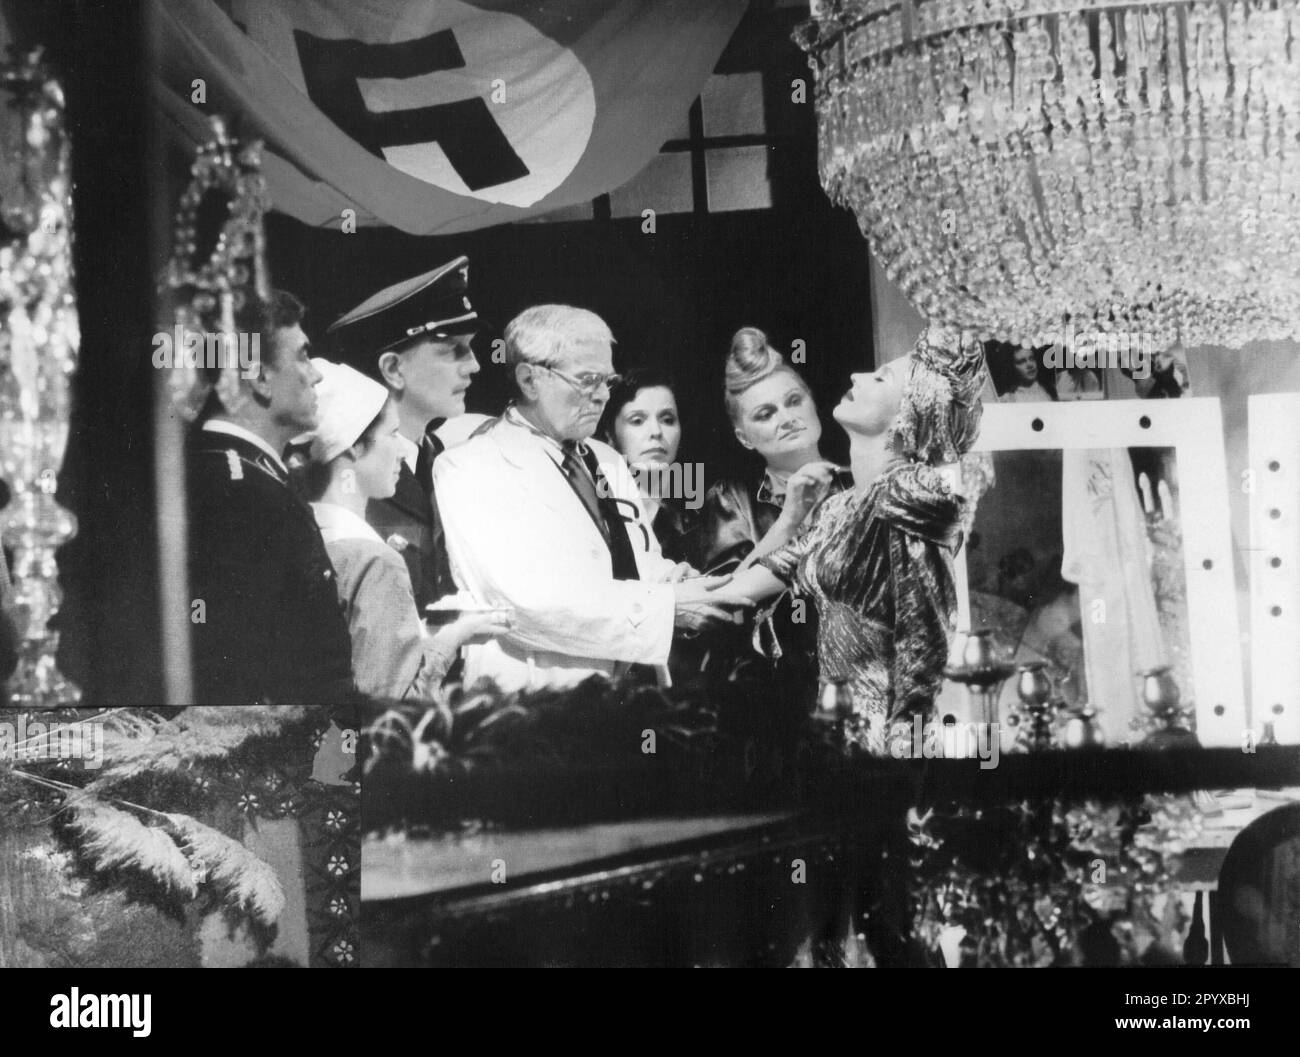 Hanna Schygulla avec Erik Schumann, Karl Heinz von Hassel et Herbert Steinmetz dans 'Lili Marleen', réalisé par Rainer Werner Fassbinder, Allemagne 1981. [traduction automatique] Banque D'Images